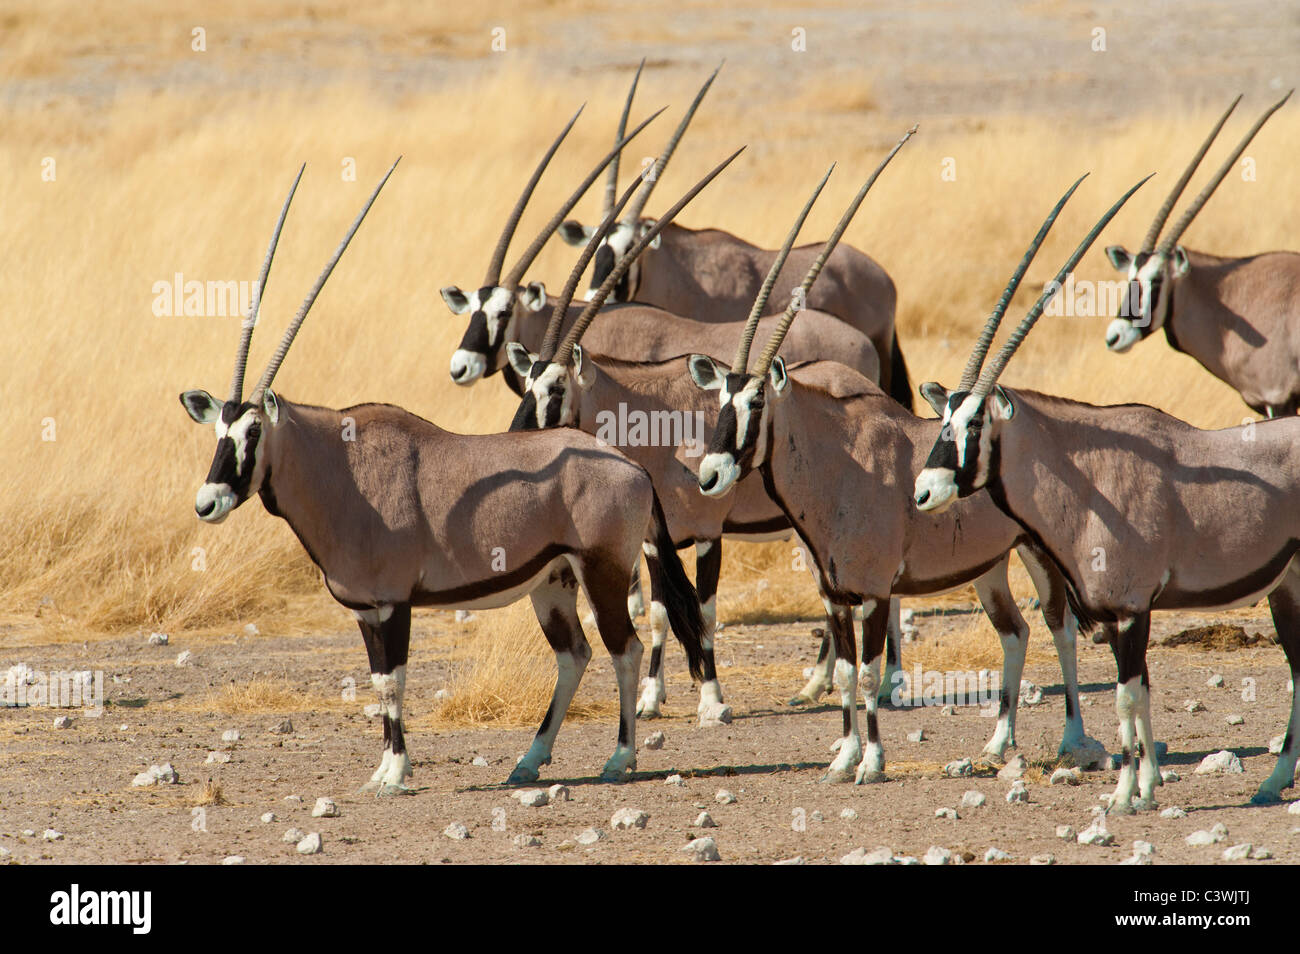 oryx gazella gazelle namibia golden gold grass grassland land 600 mm tele teleobjective smooth background gazell Stock Photo